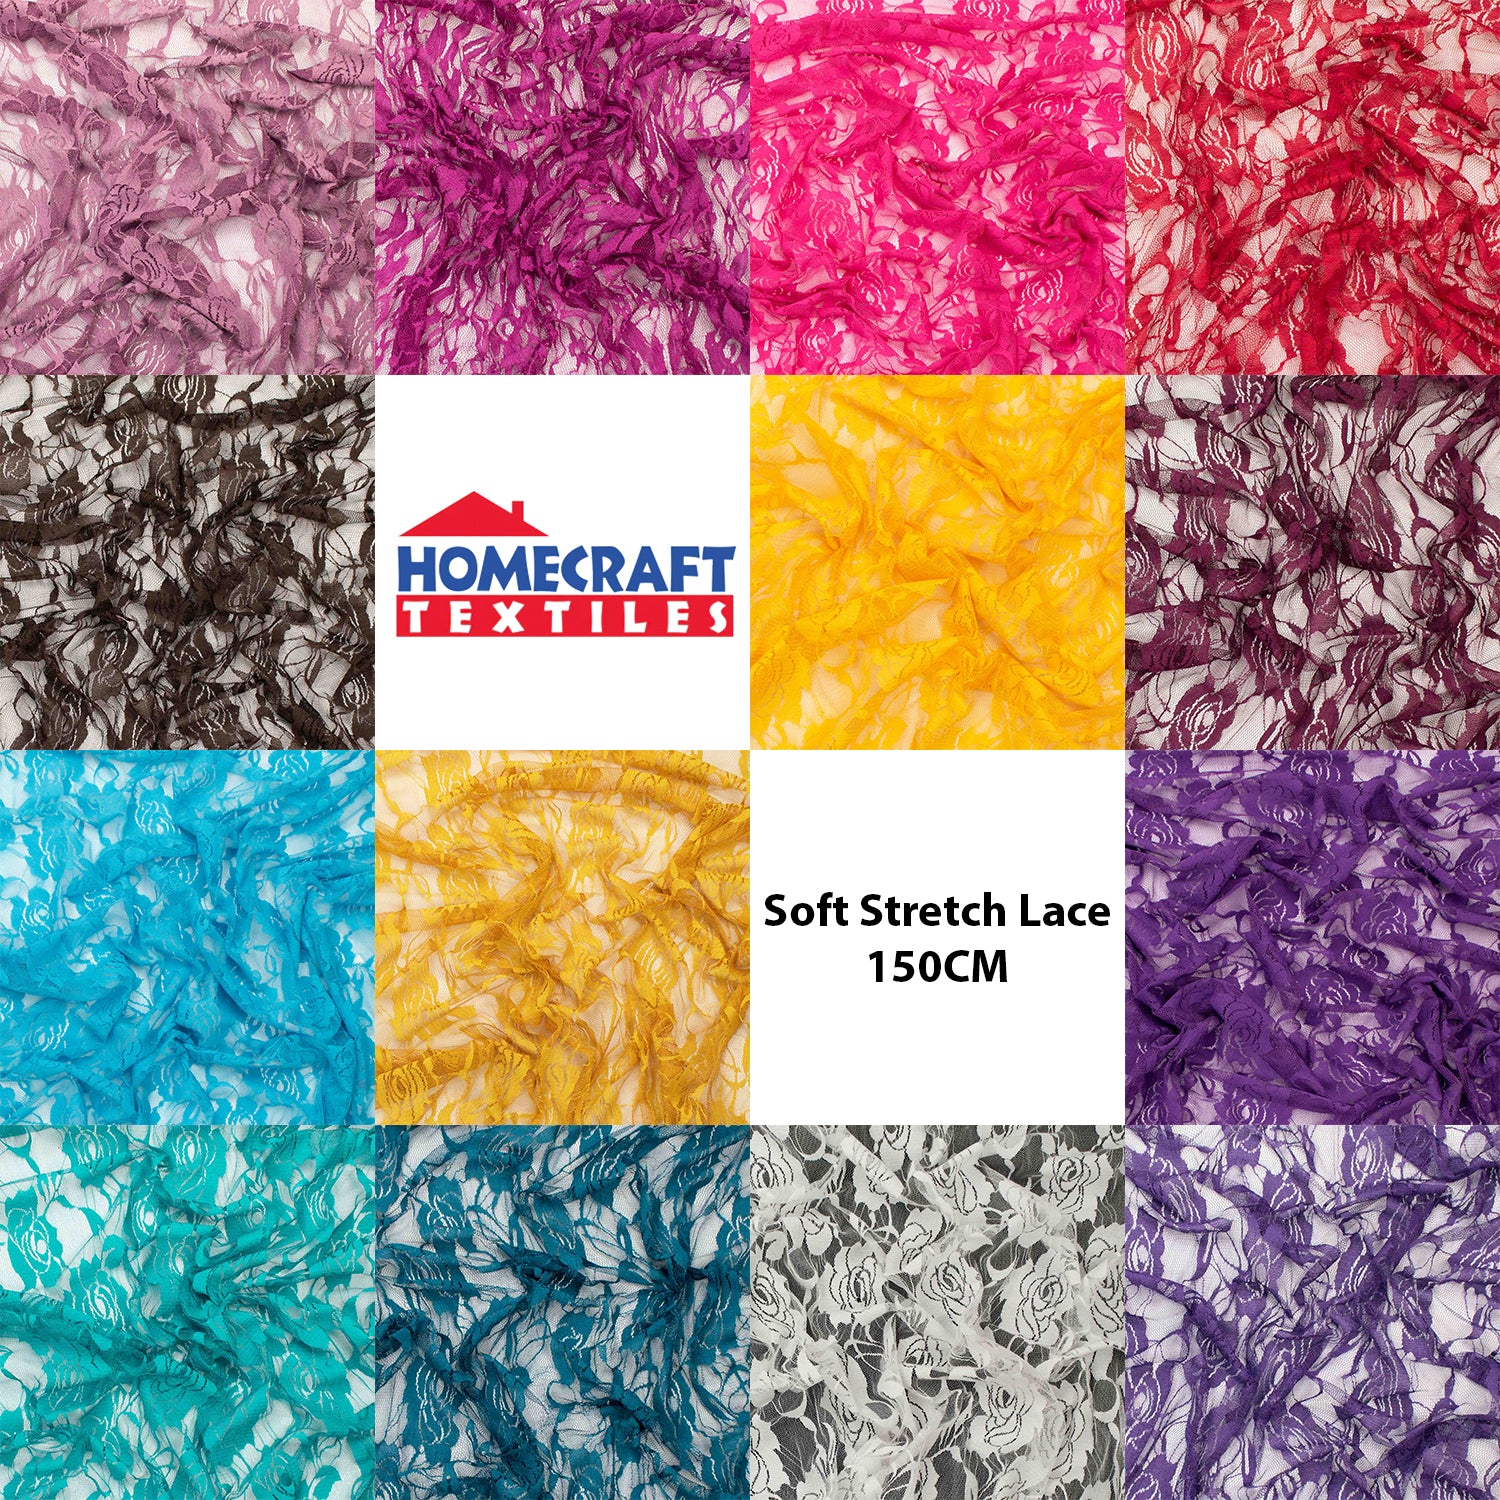 Soft Stretch Lace – Homecraft Textiles